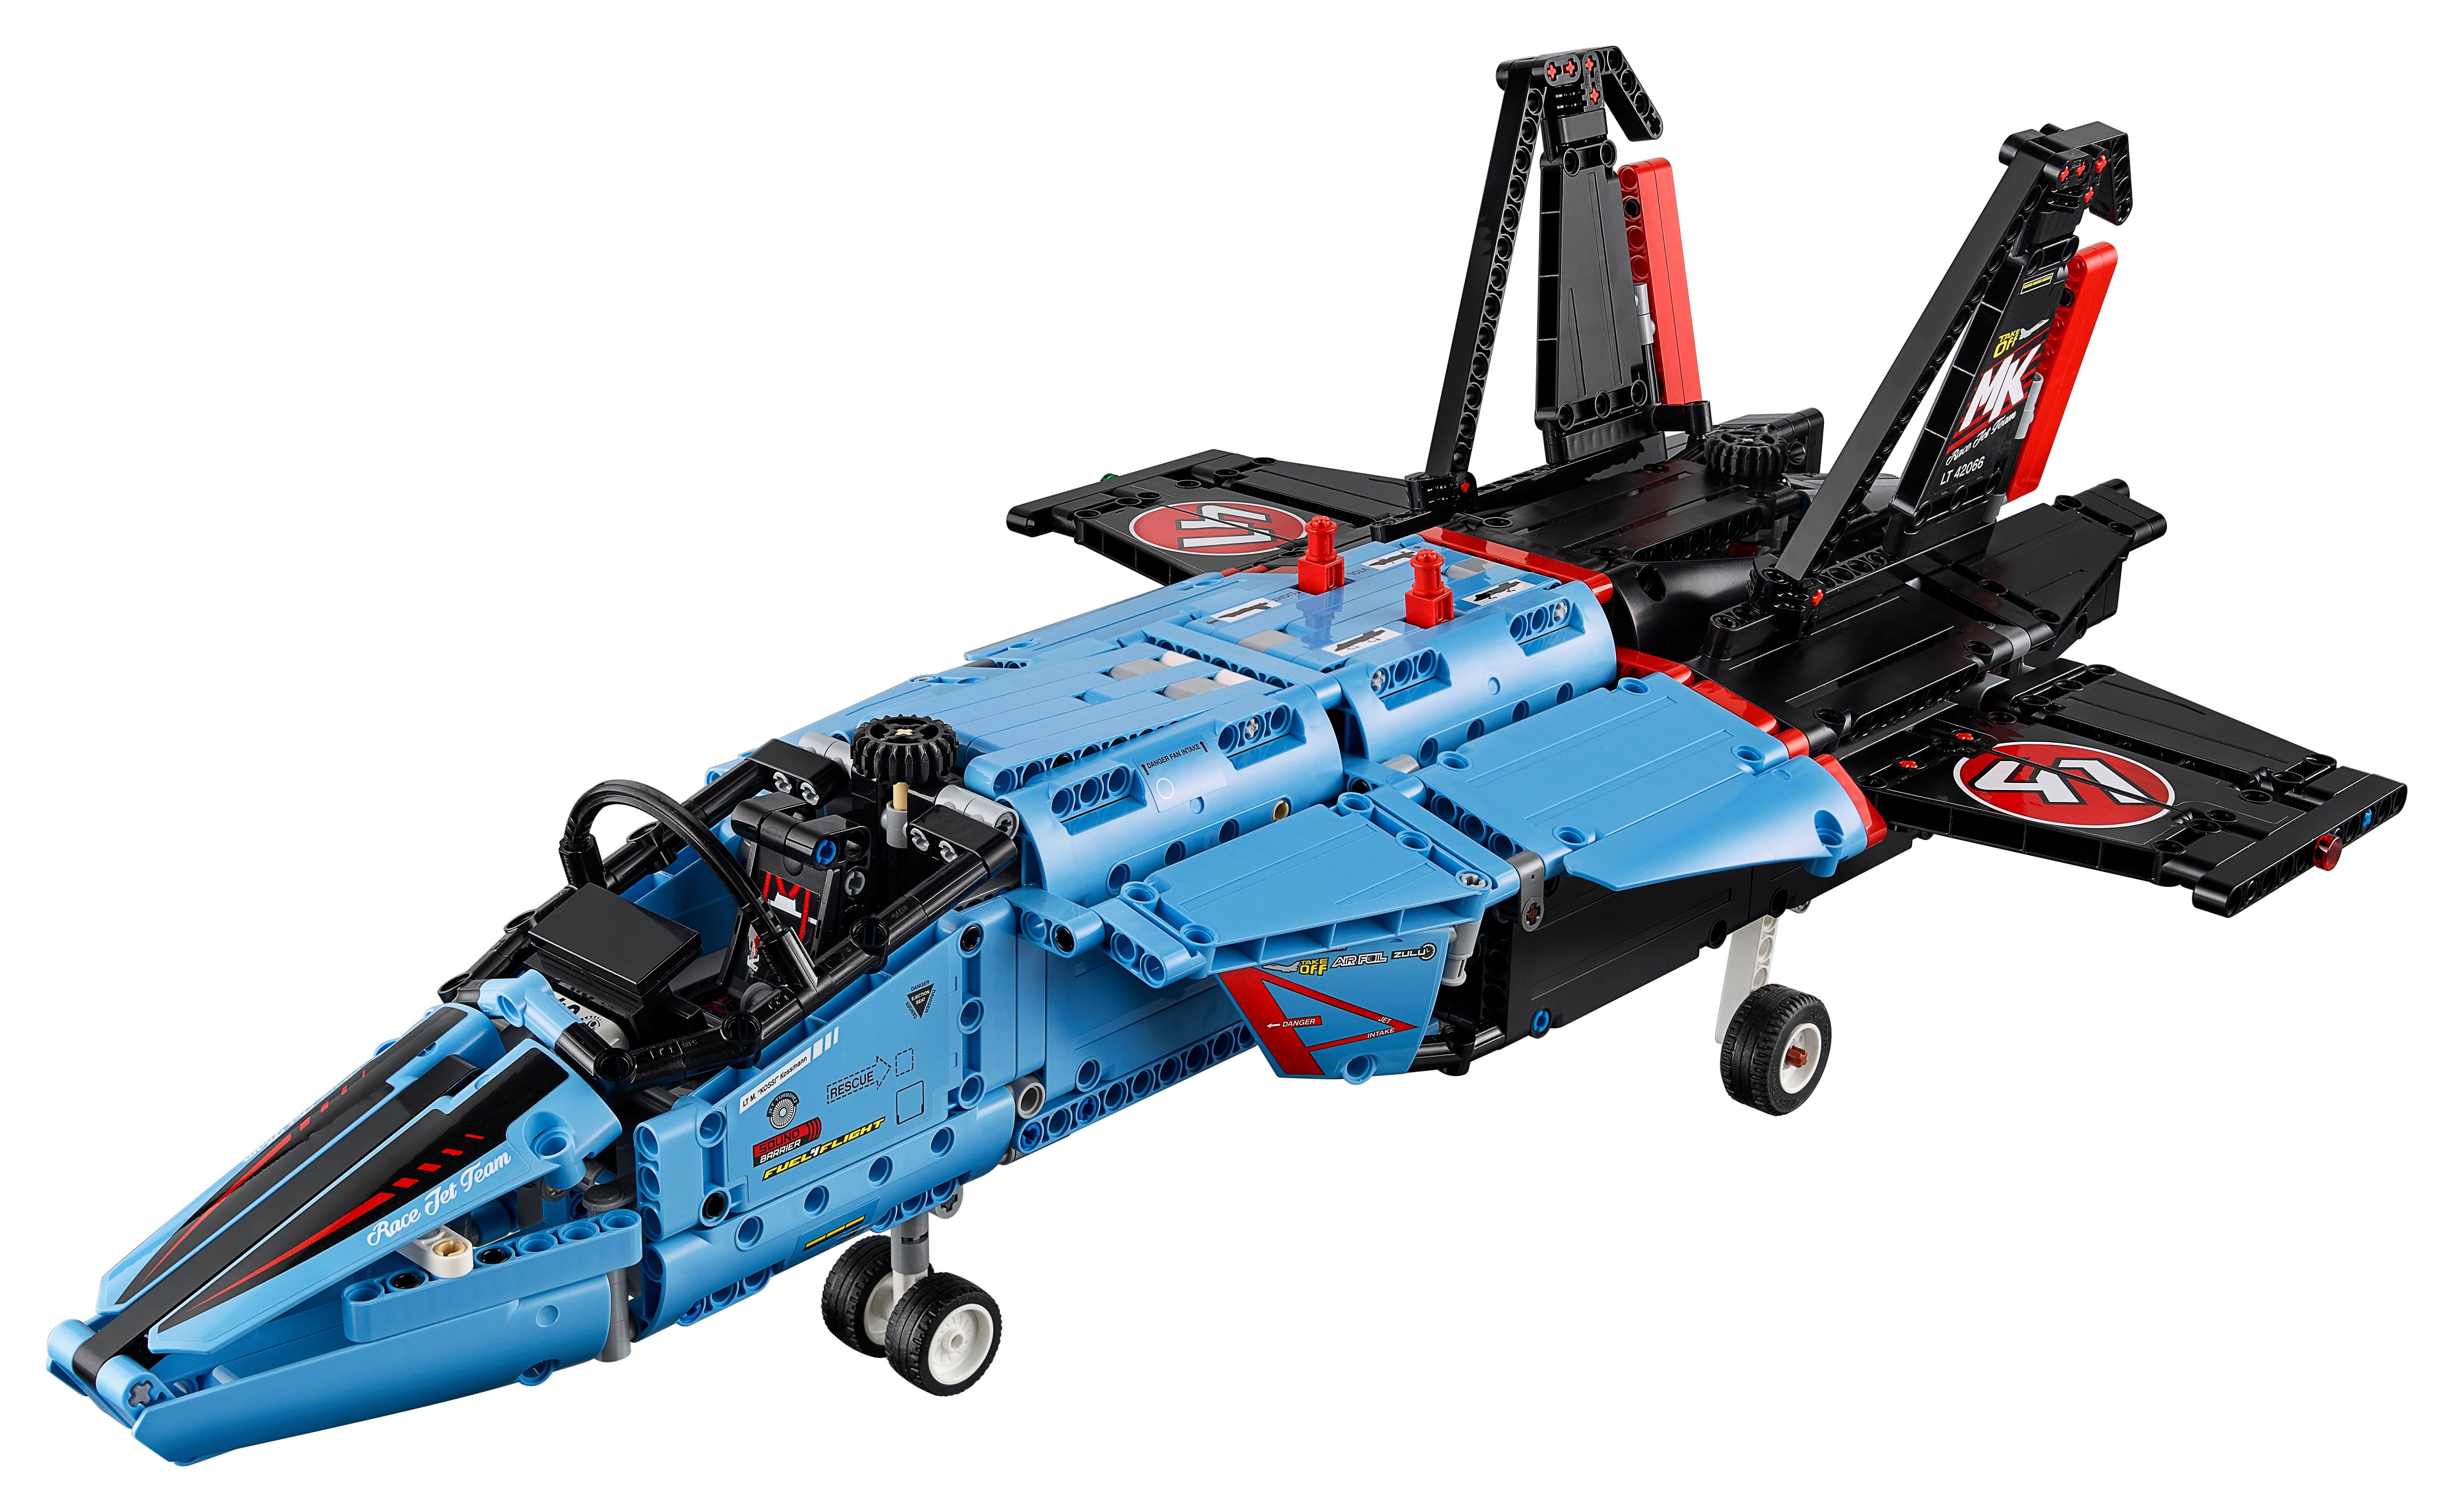 LEGO®  42066 Air Race Jet 